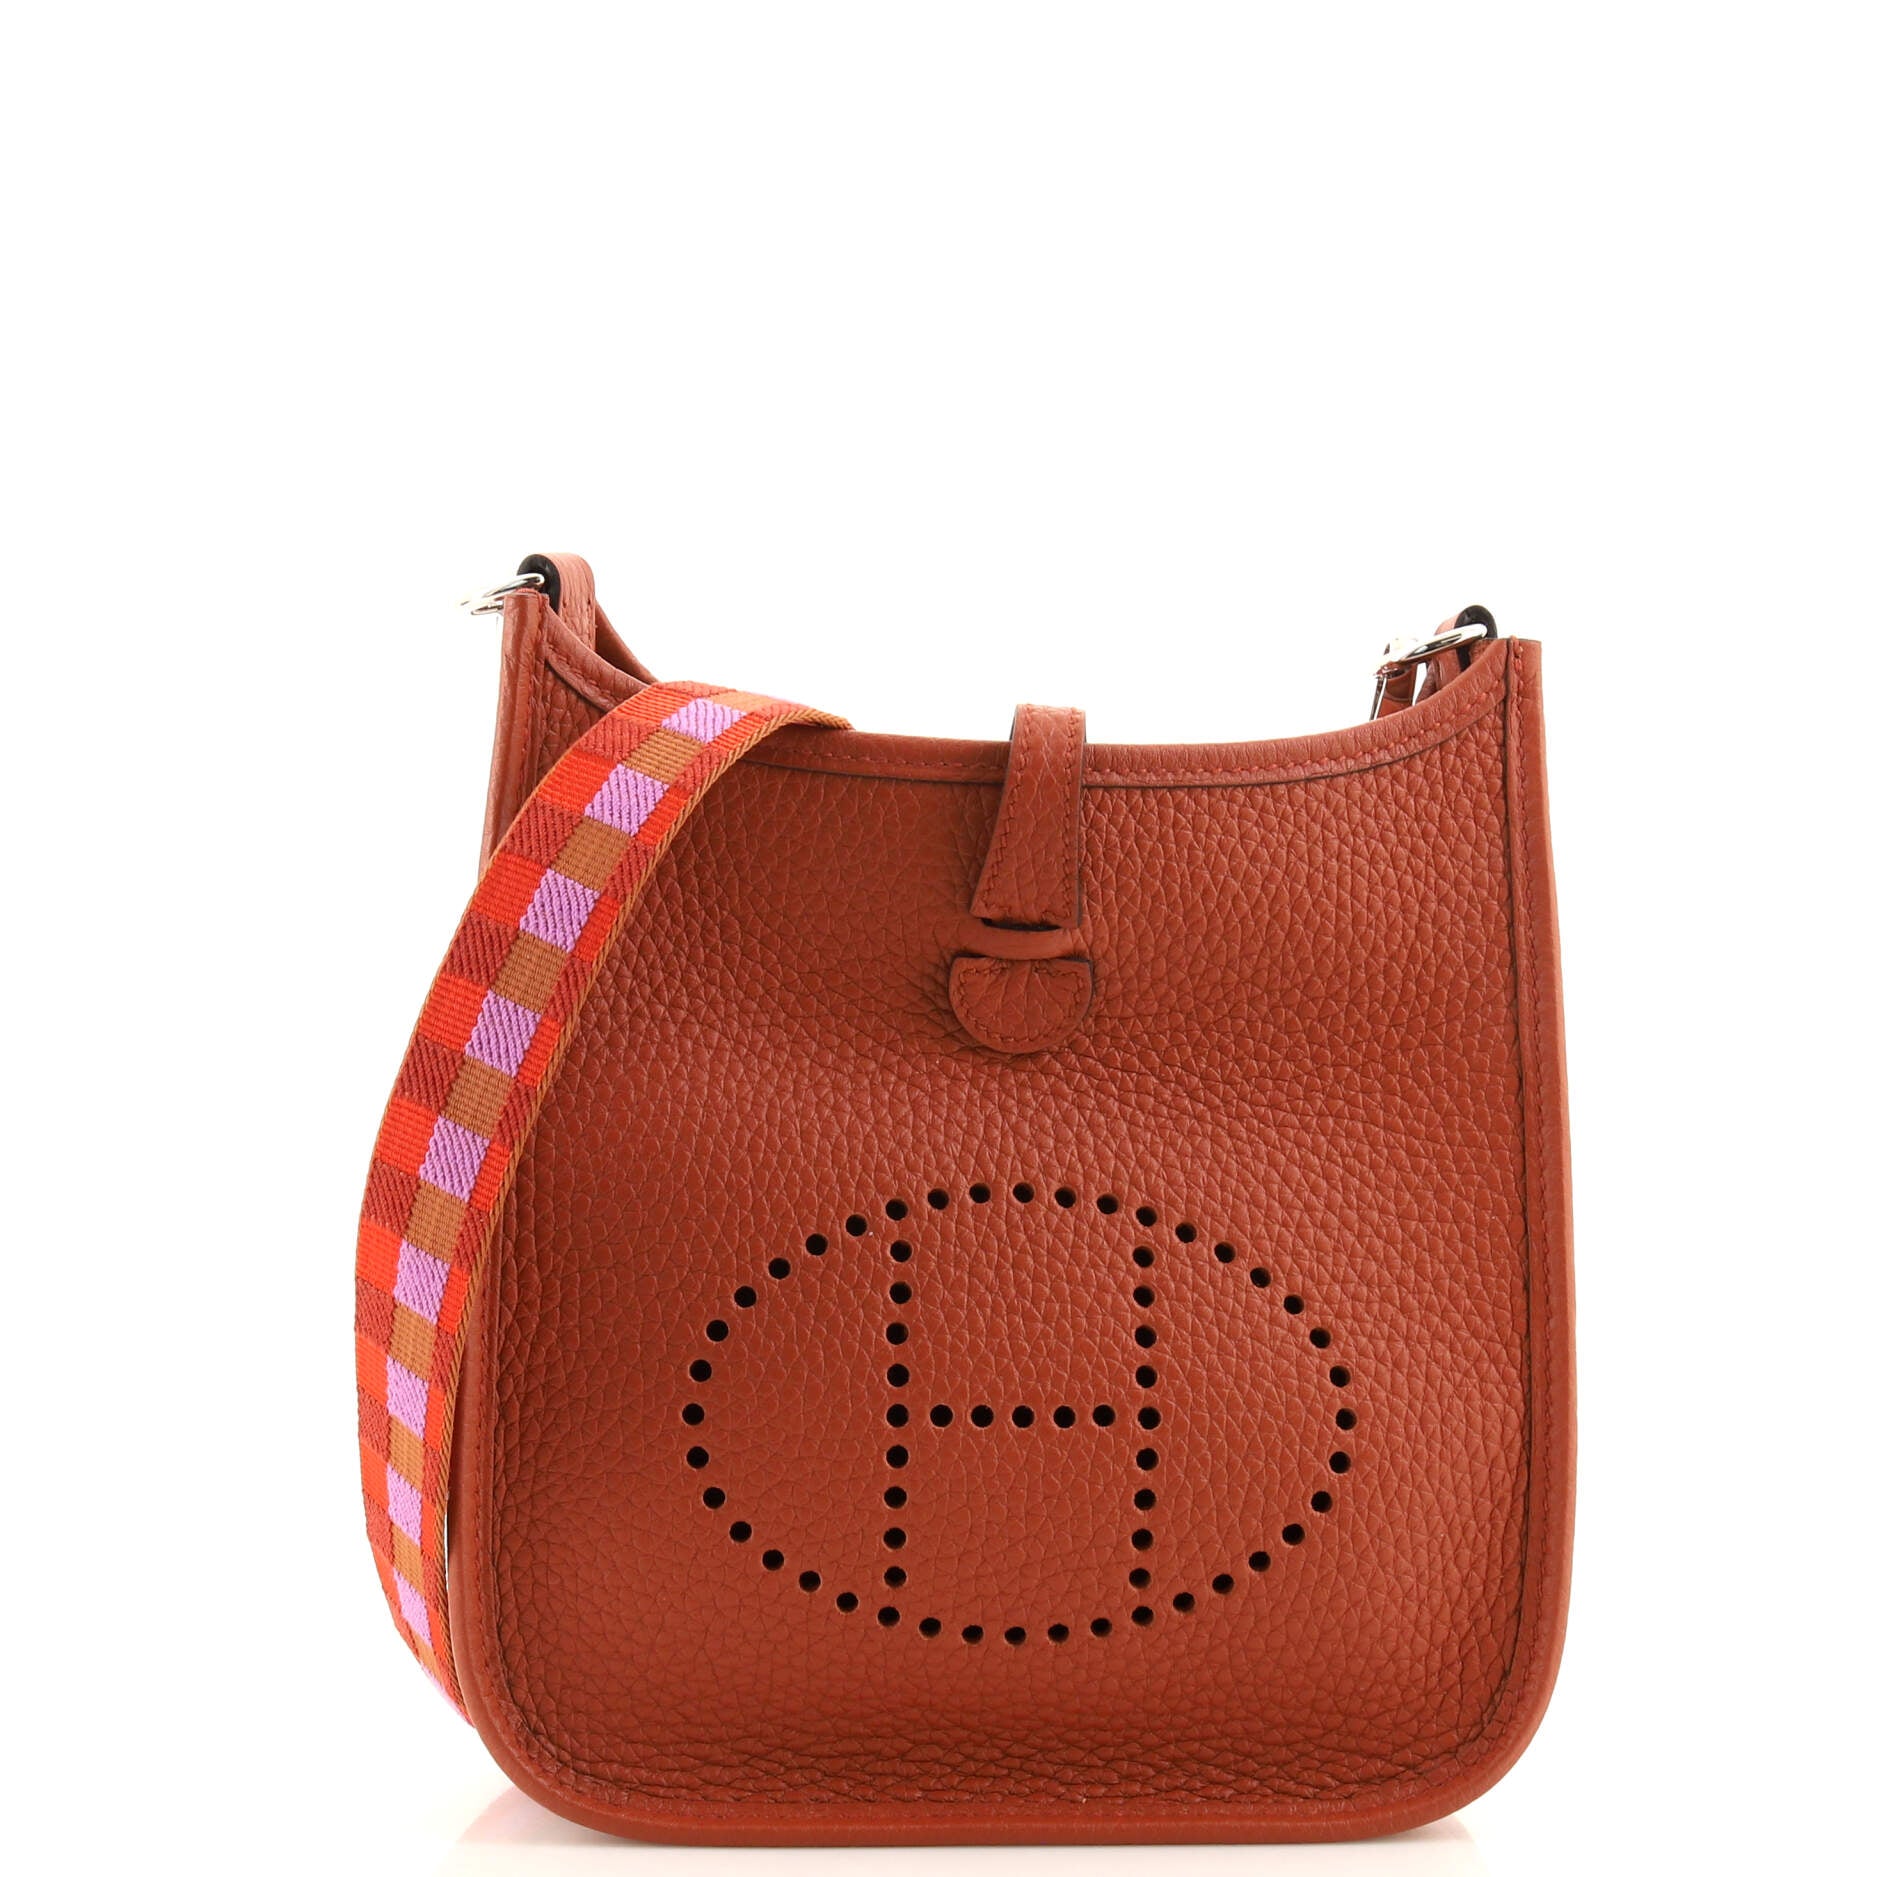 Hermes Constance Mini Shoulder Bag in Brick Red Box Leather